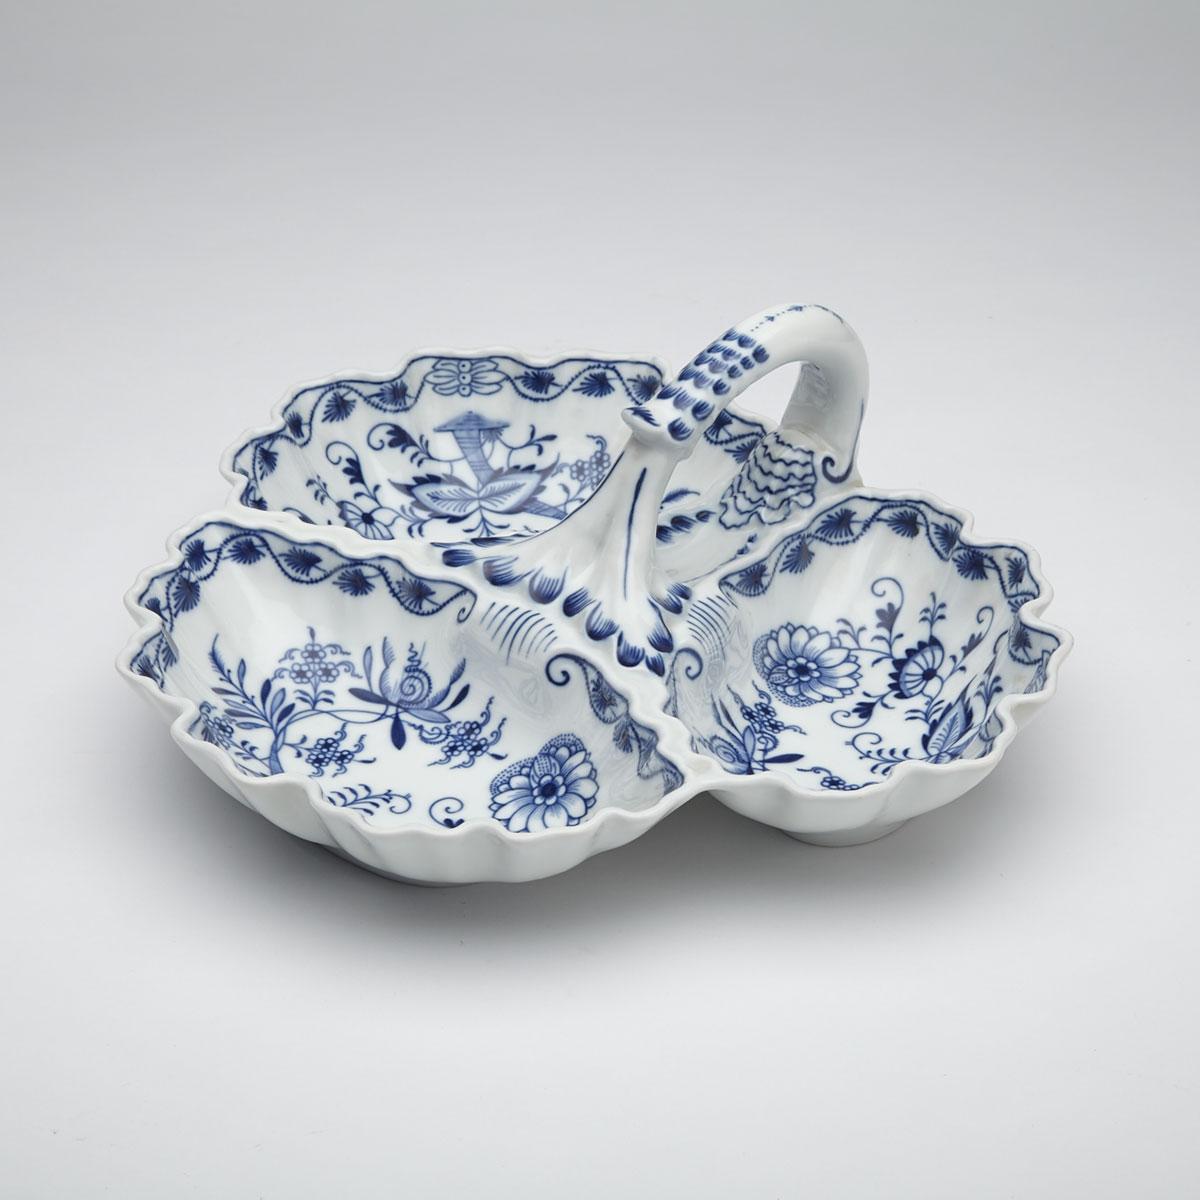 Teichert ‘Meissen’ Blue Onion Pattern Three Section Dish, late 19th century